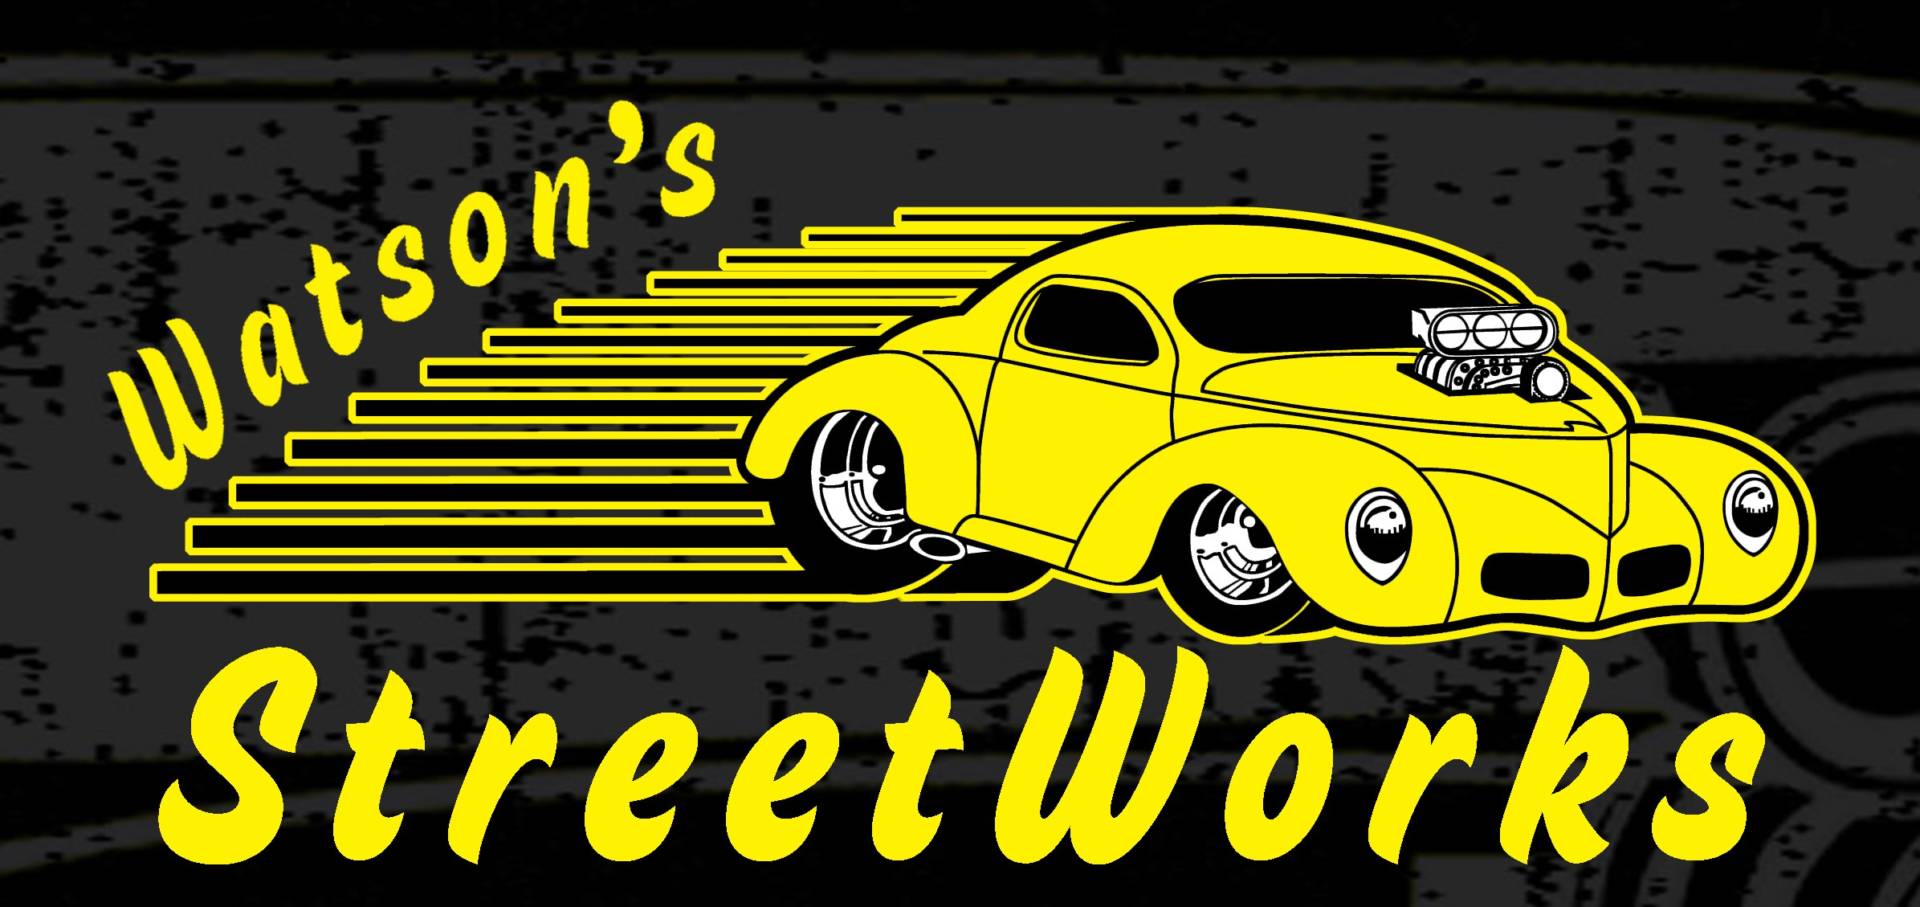 hands free: Watson's StreetWorks